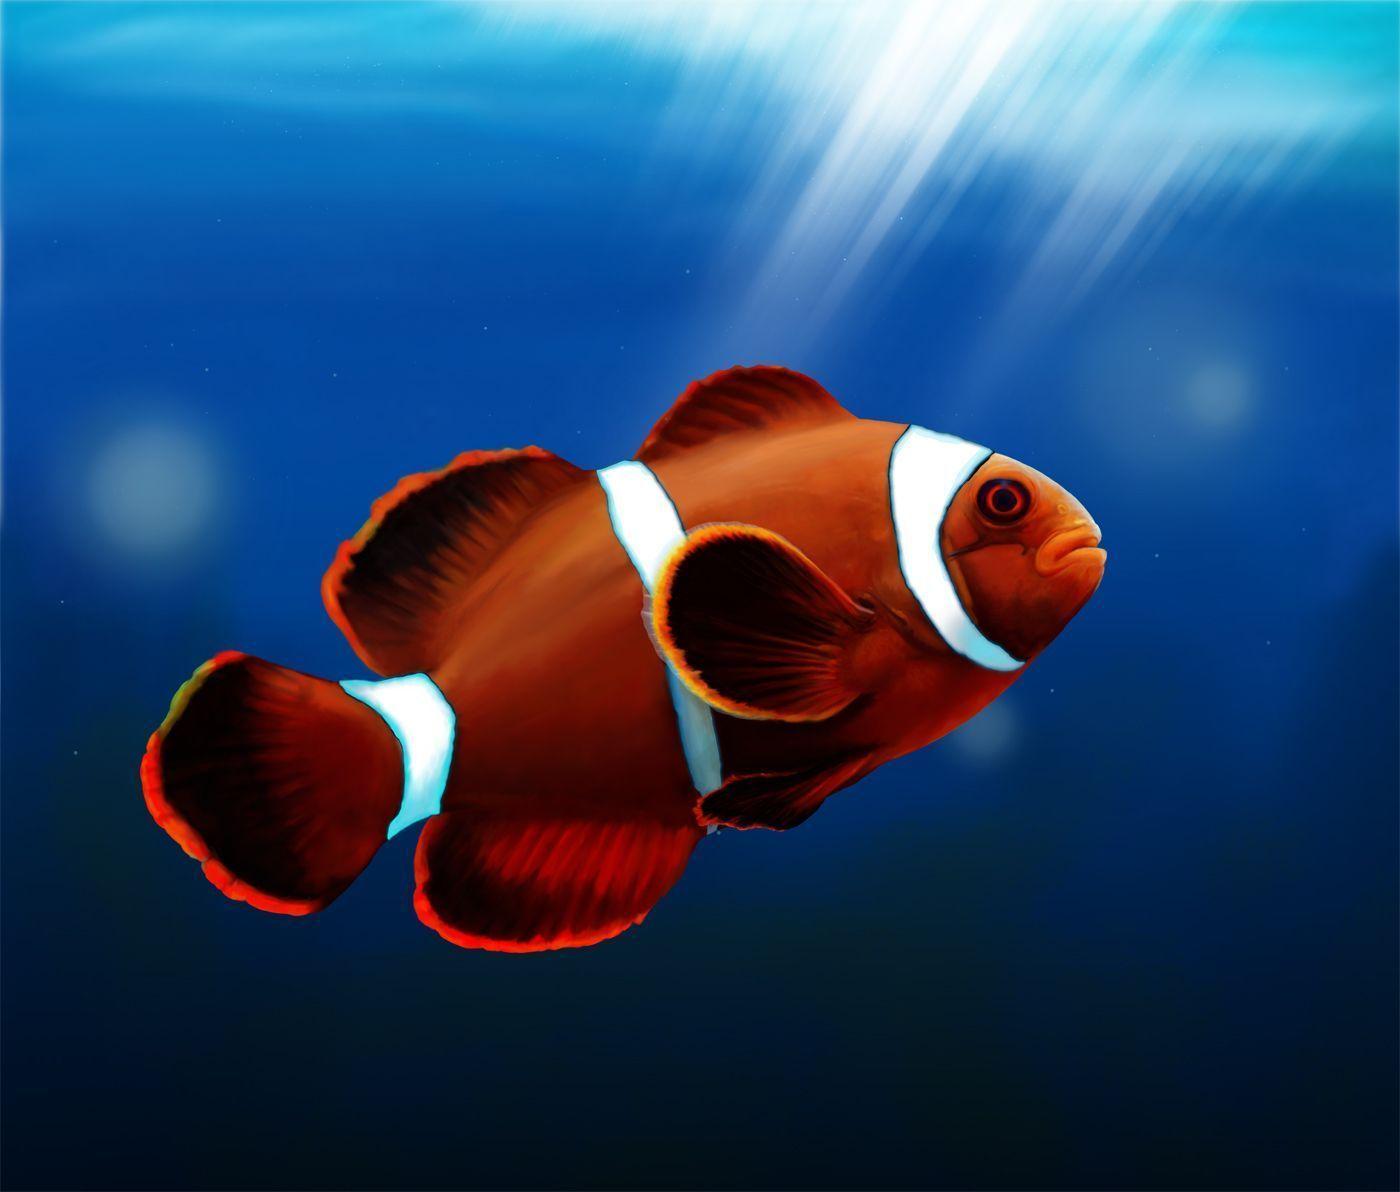 Cute Clown Fish Wallpaper For Android. Fish, Wallpaper, Cute